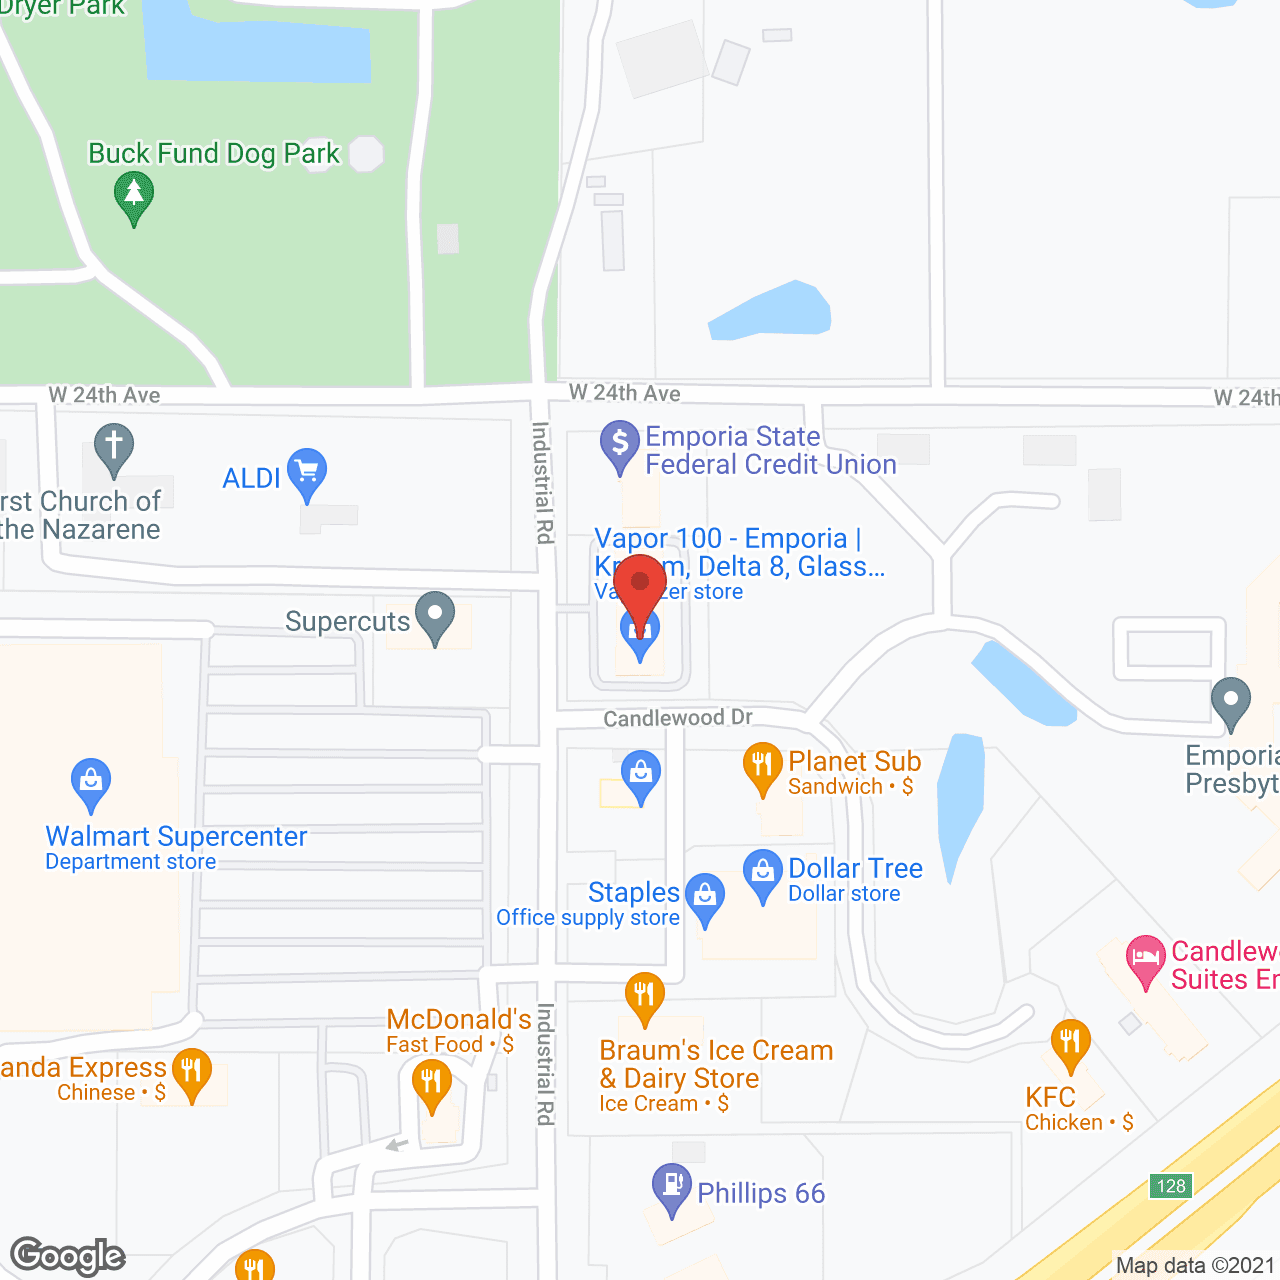 Emporia Presbyterian Manor in google map